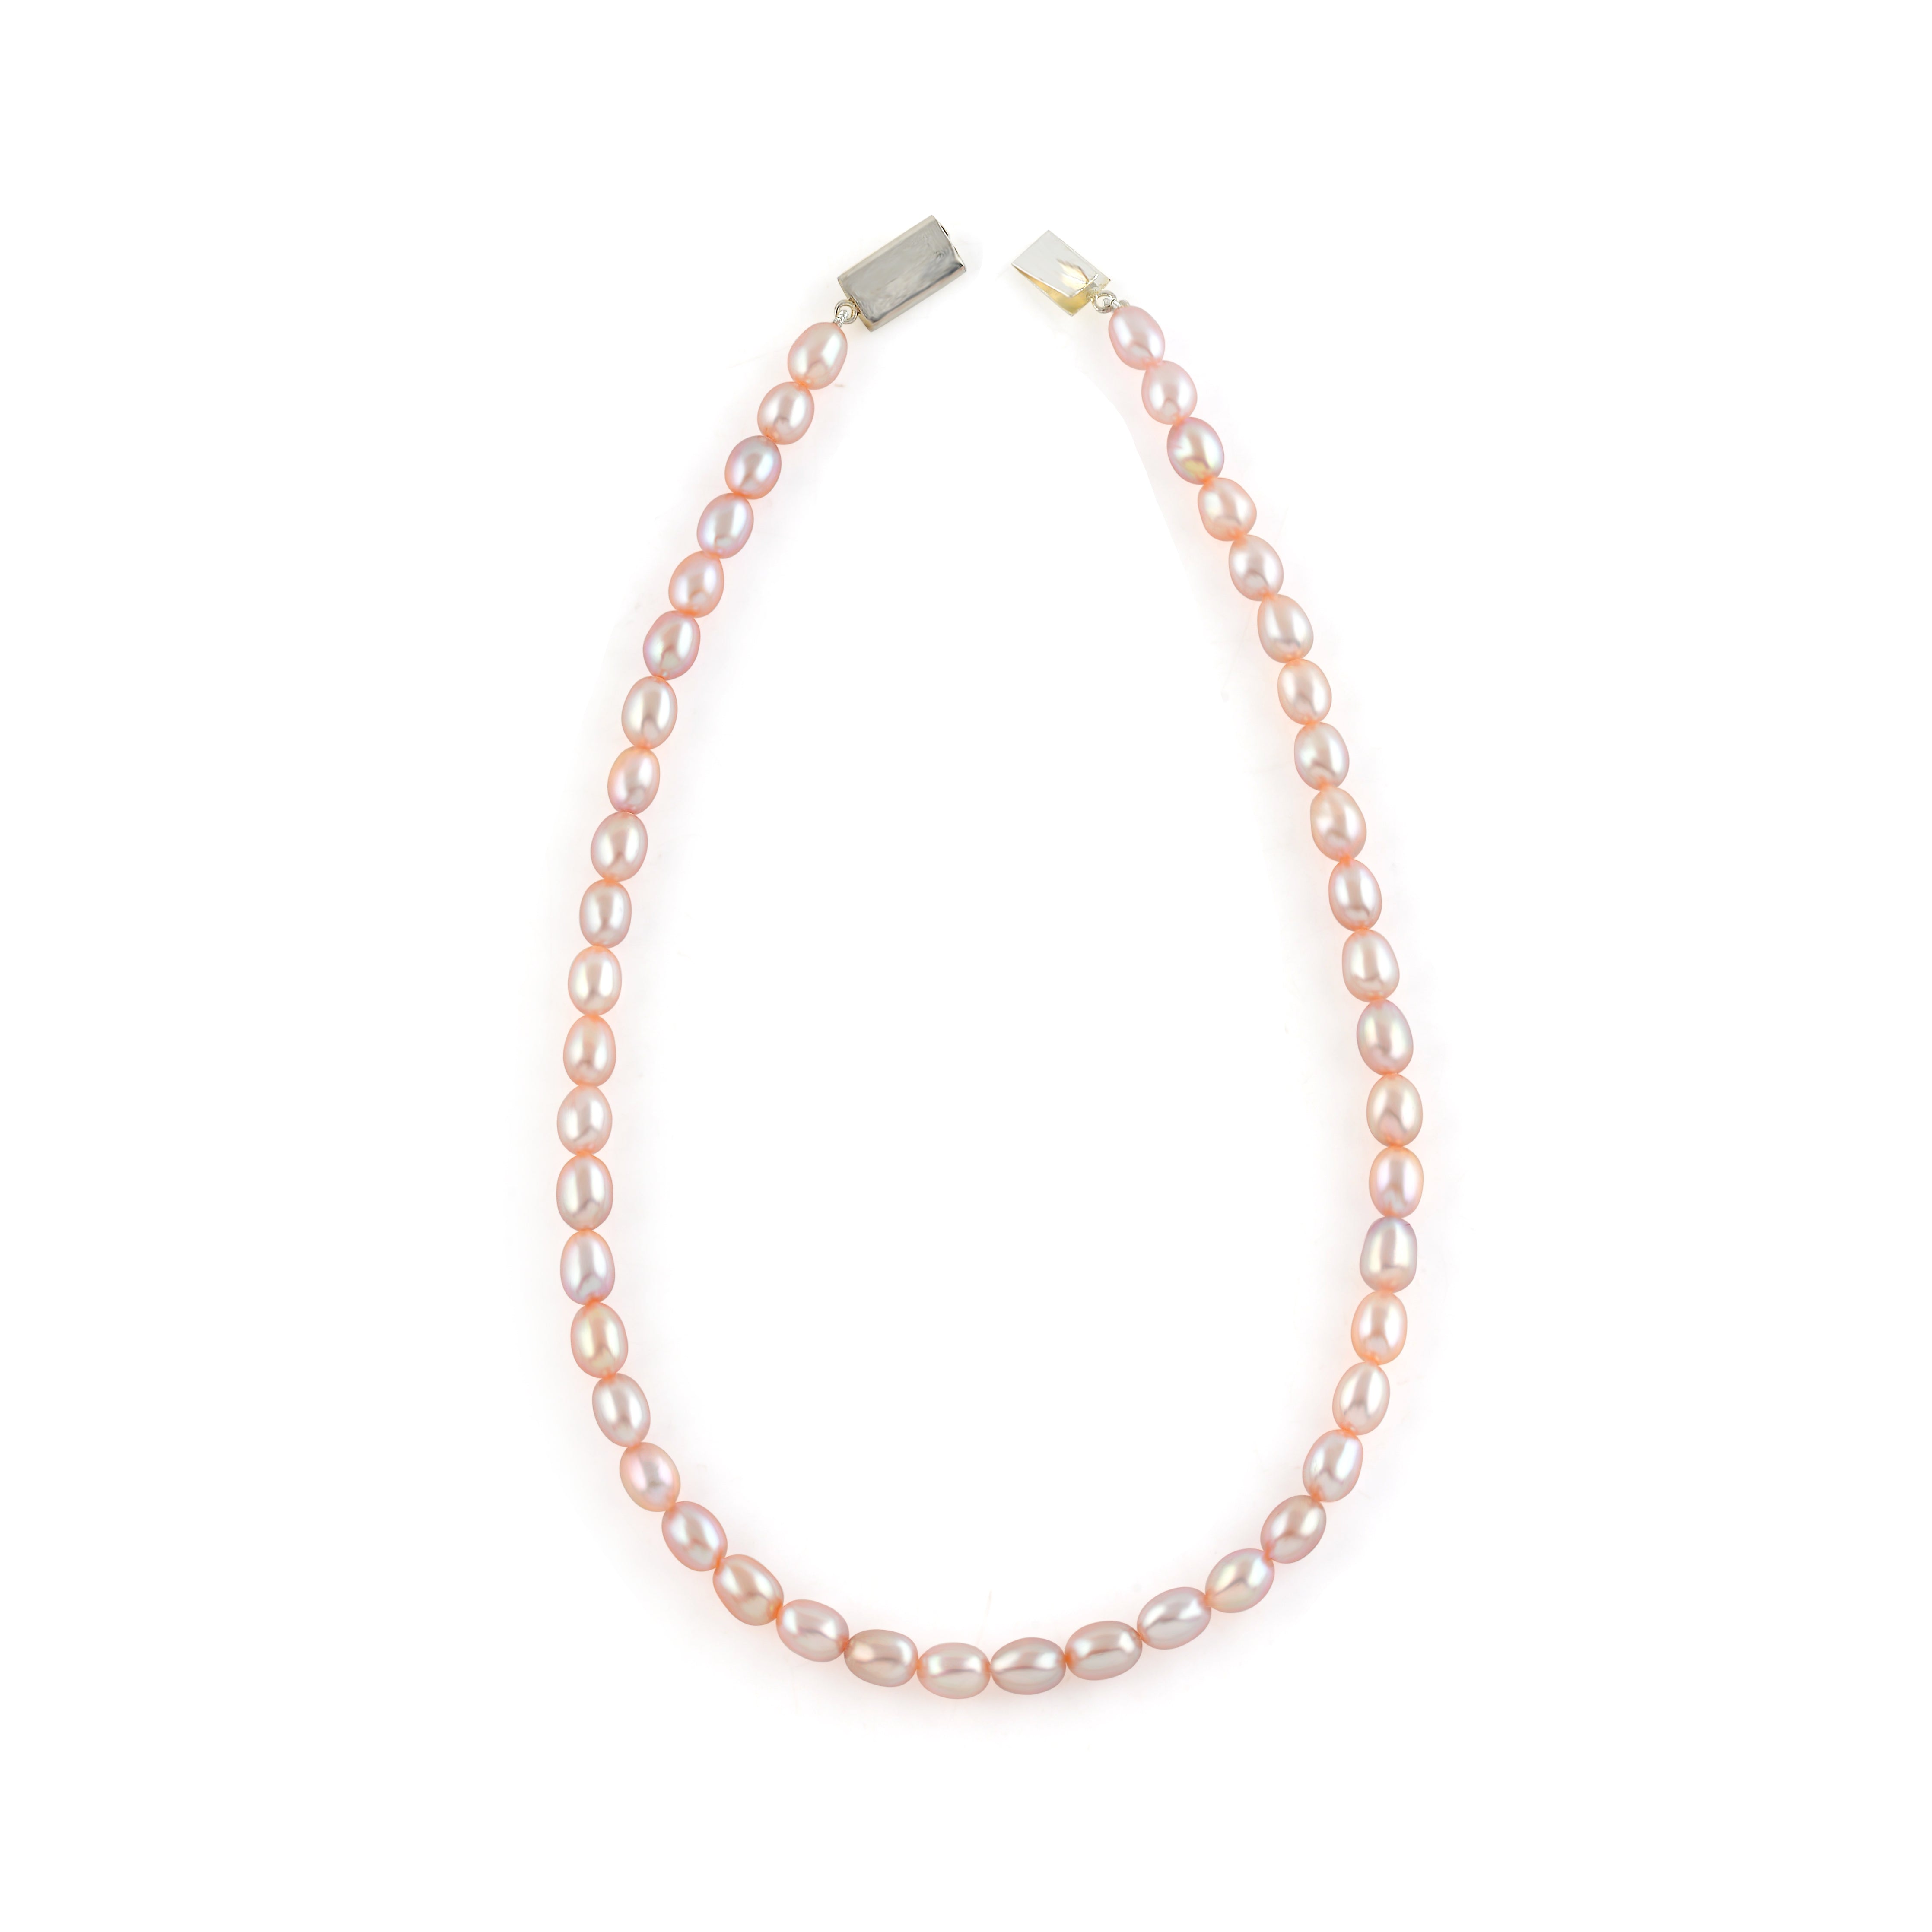 Single Line Pearl Necklace in Peach Blossom